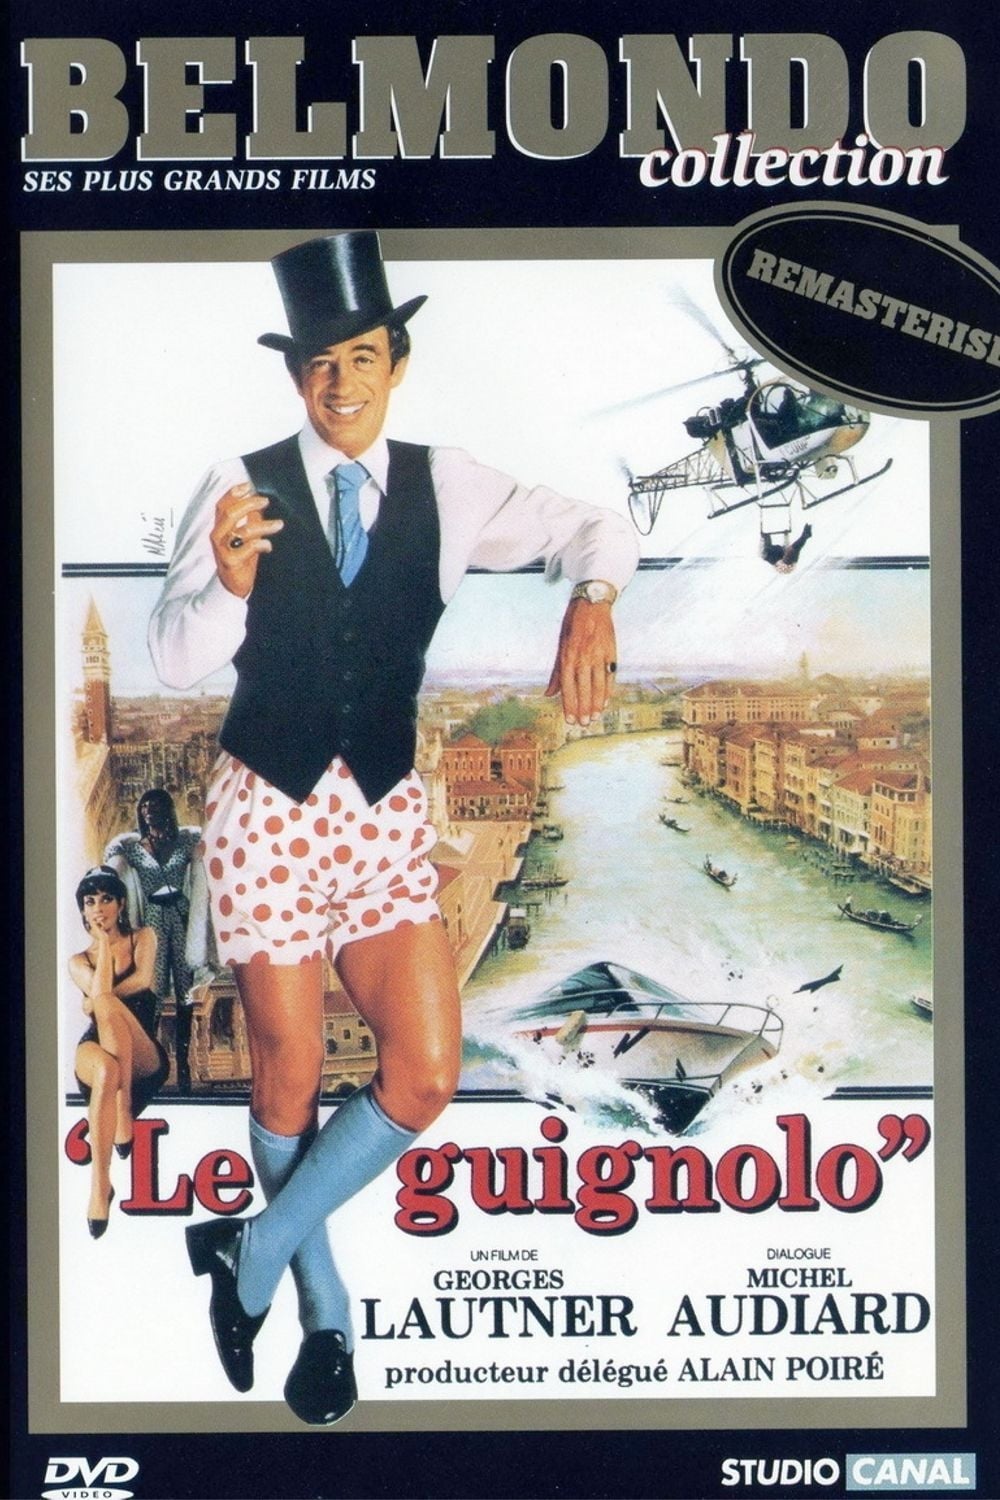 Бельмондо в четыре руки. Le GUIGNOLO 1980 poster. Le GUIGNOLO, 1980 DVD.